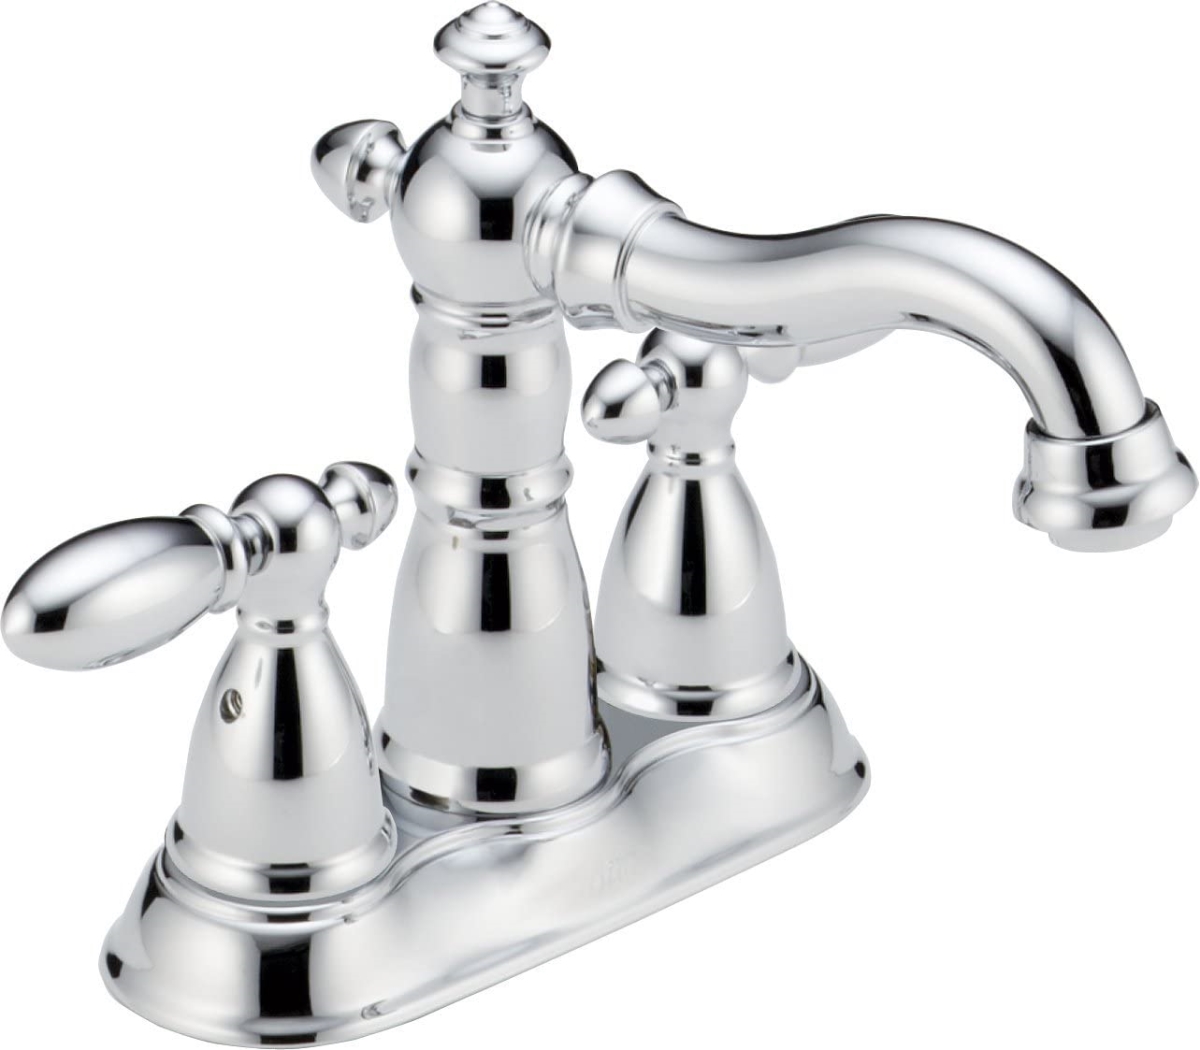 Delta Faucet Victorian Centerset Bathroom Faucet Chrome, Bathroom Sink Faucet, Diamond Seal Technology, Metal Drain Assembly,